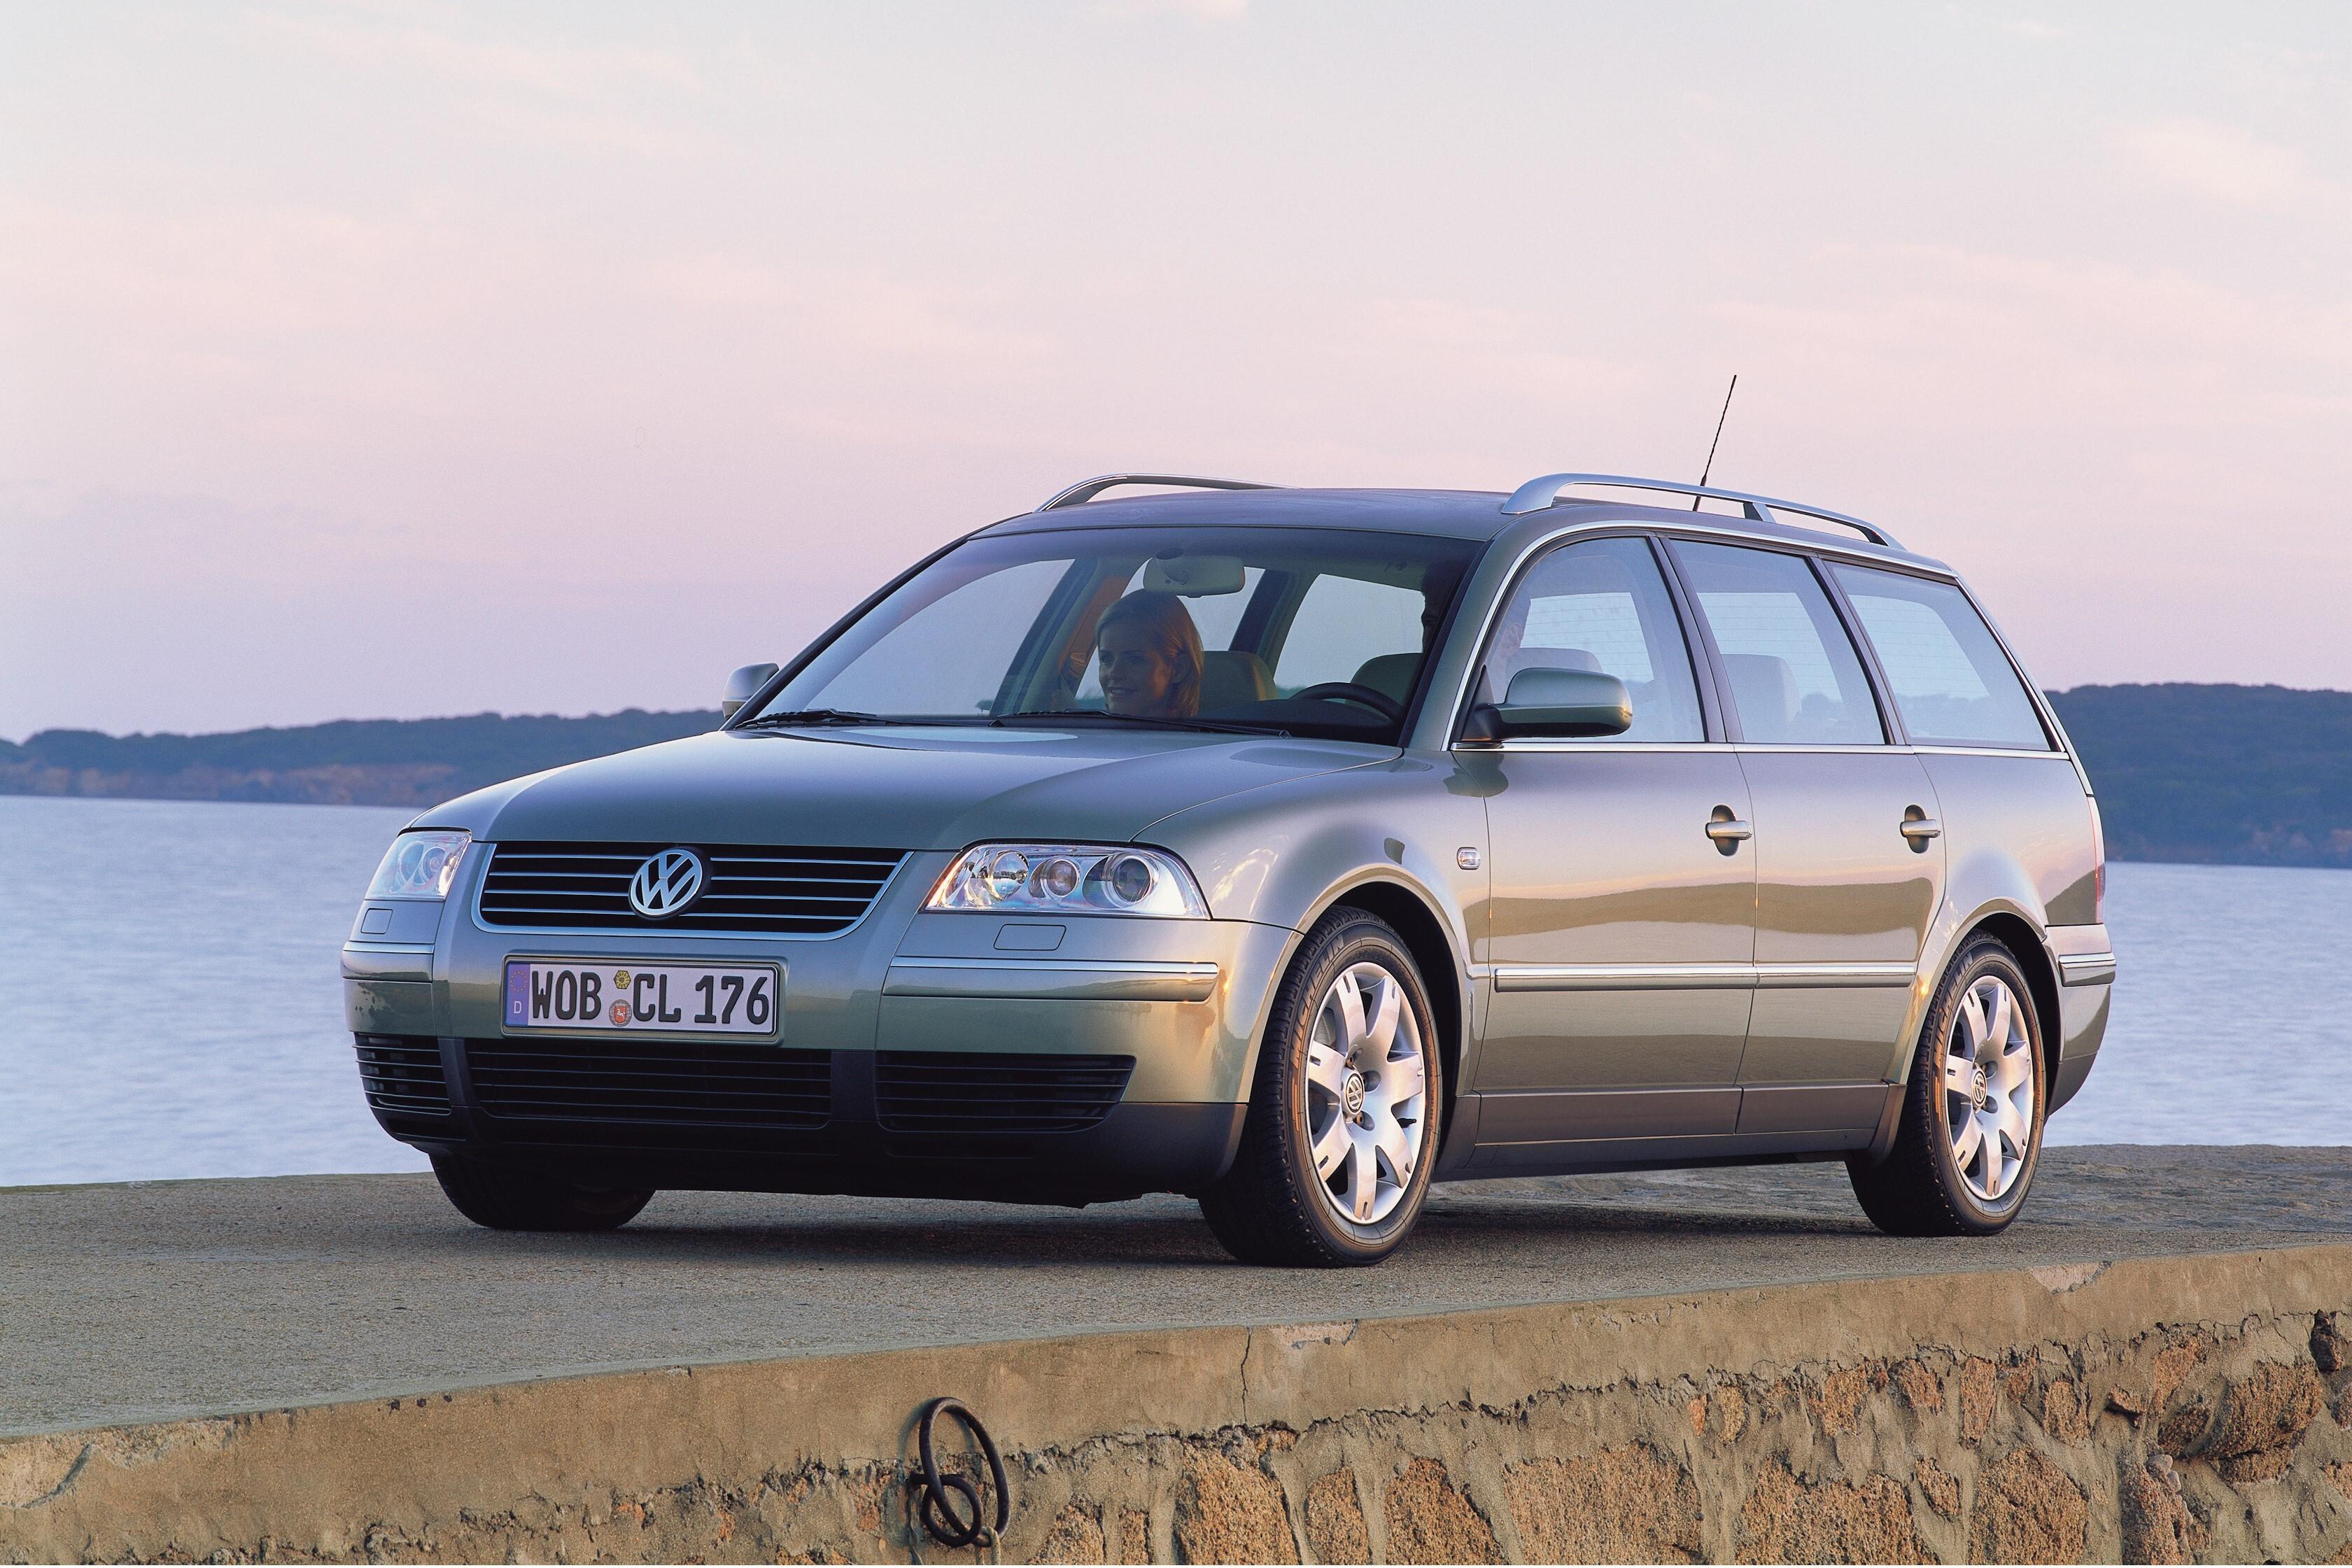 Б5 плюс универсал. Volkswagen b5 универсал. VW Passat b5 универсал. Passat b5.5. VW Passat универсал 2005.